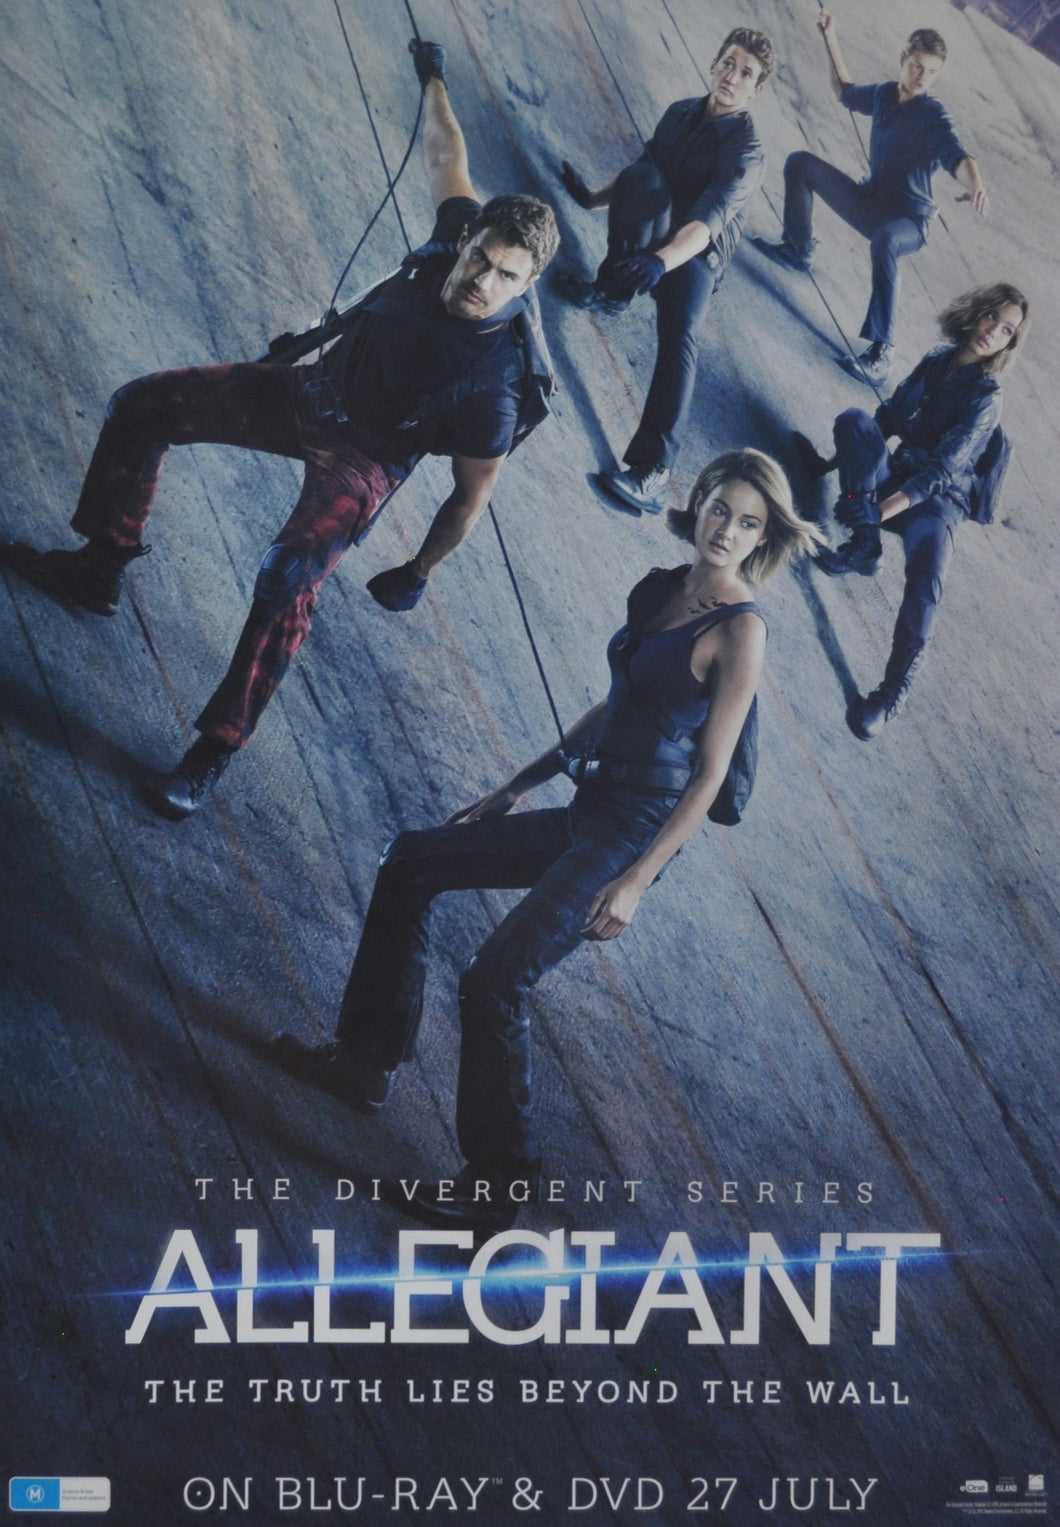 divergent dvd poster